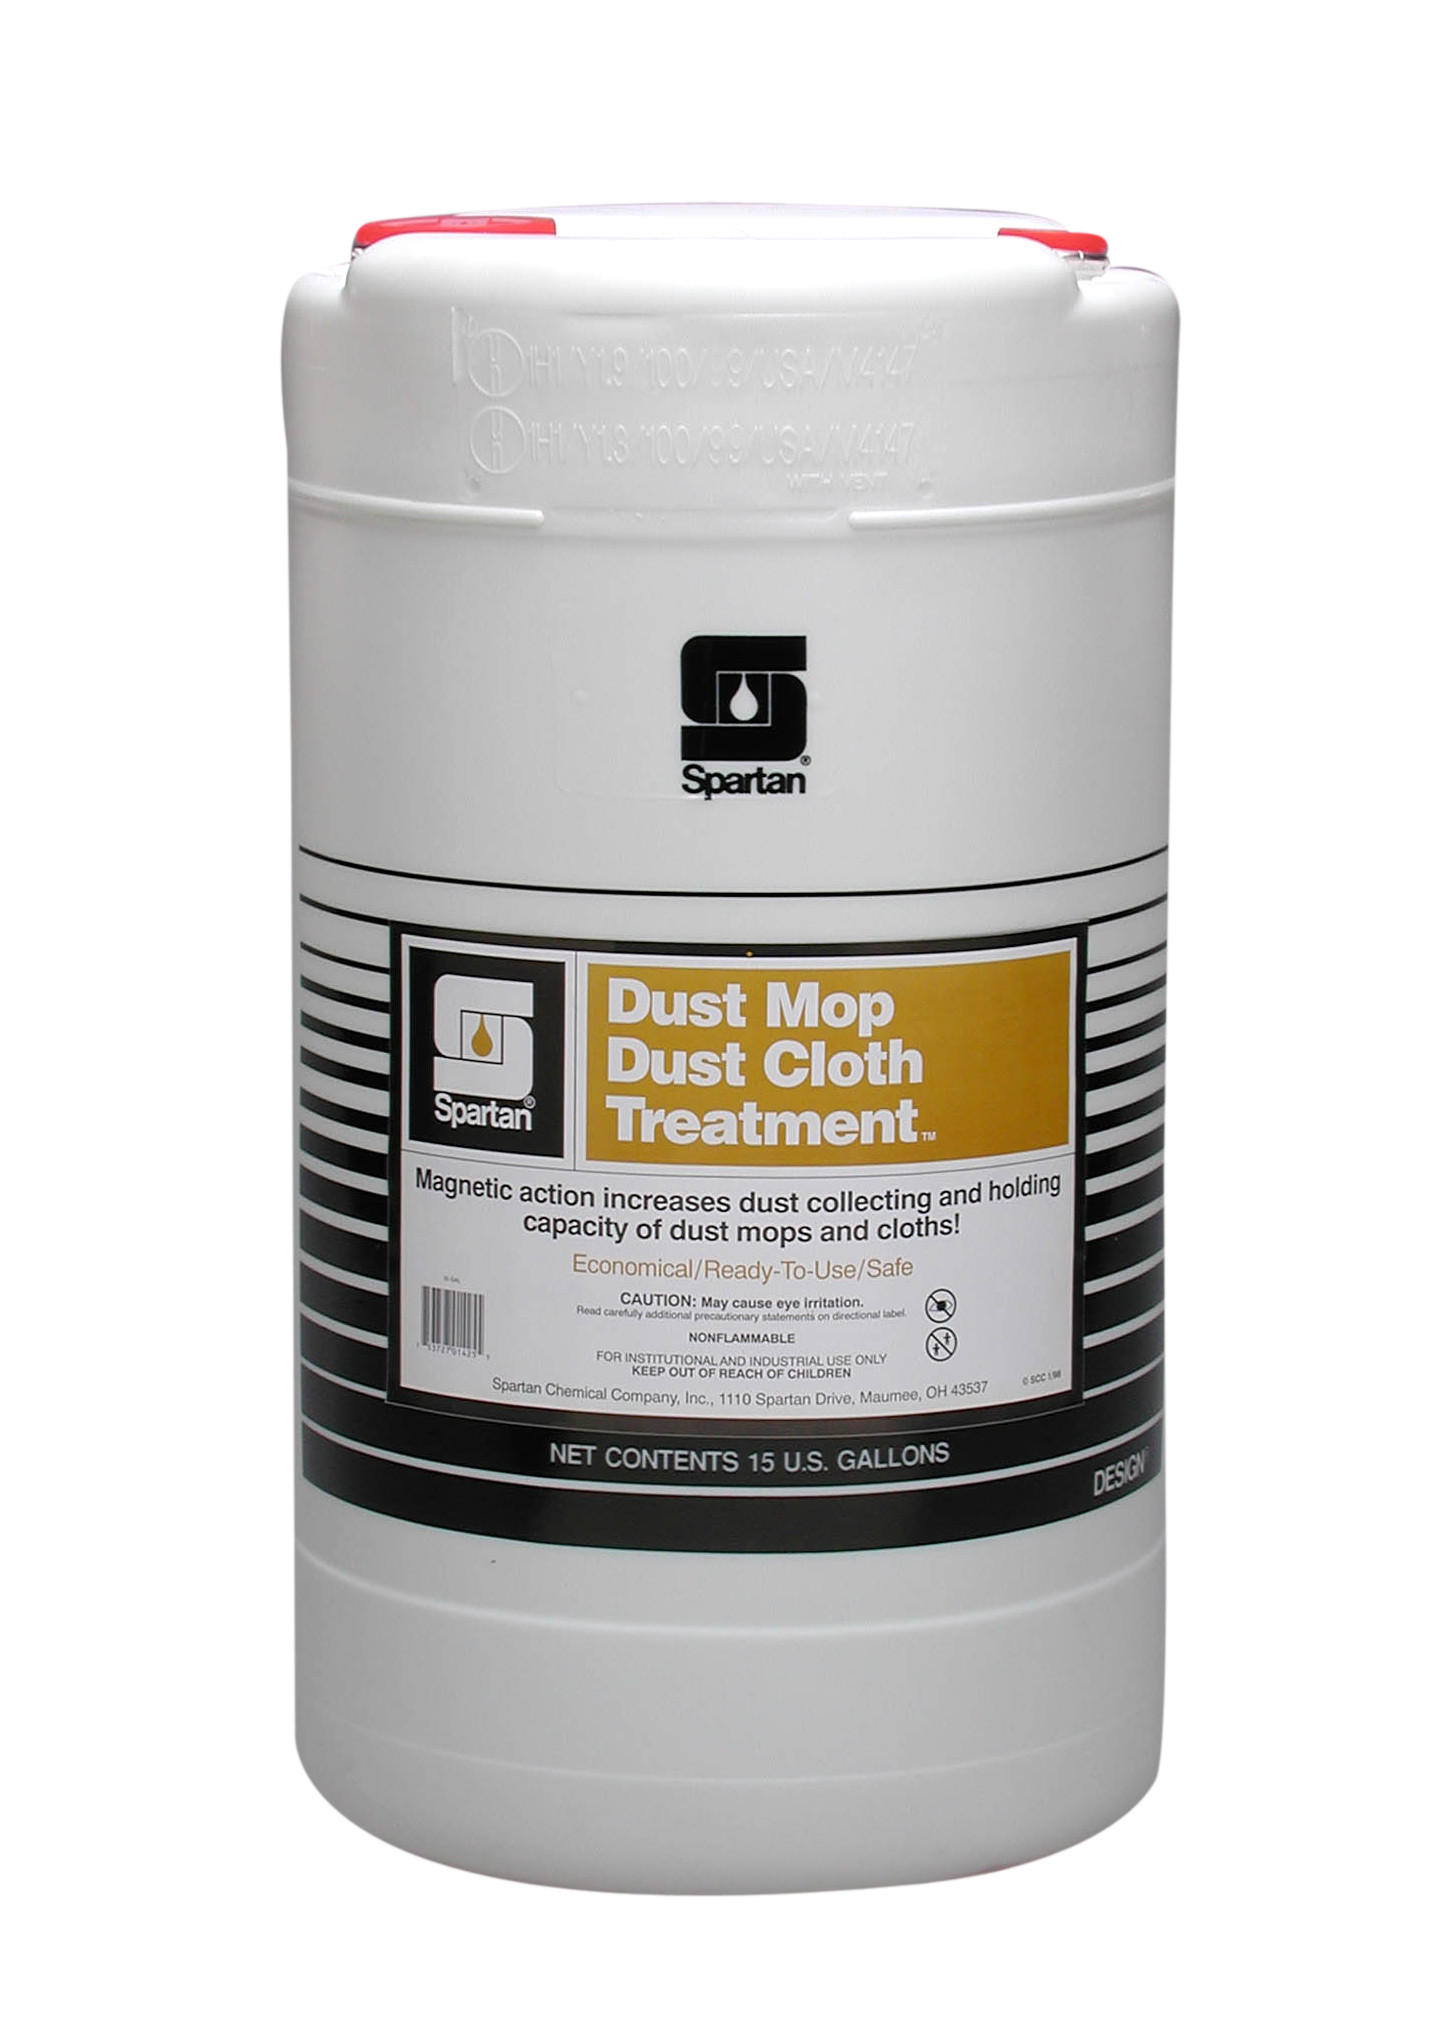 Spartan Chemical Company Dust Mop/Dust Cloth Treatment, 15 GAL DRUM